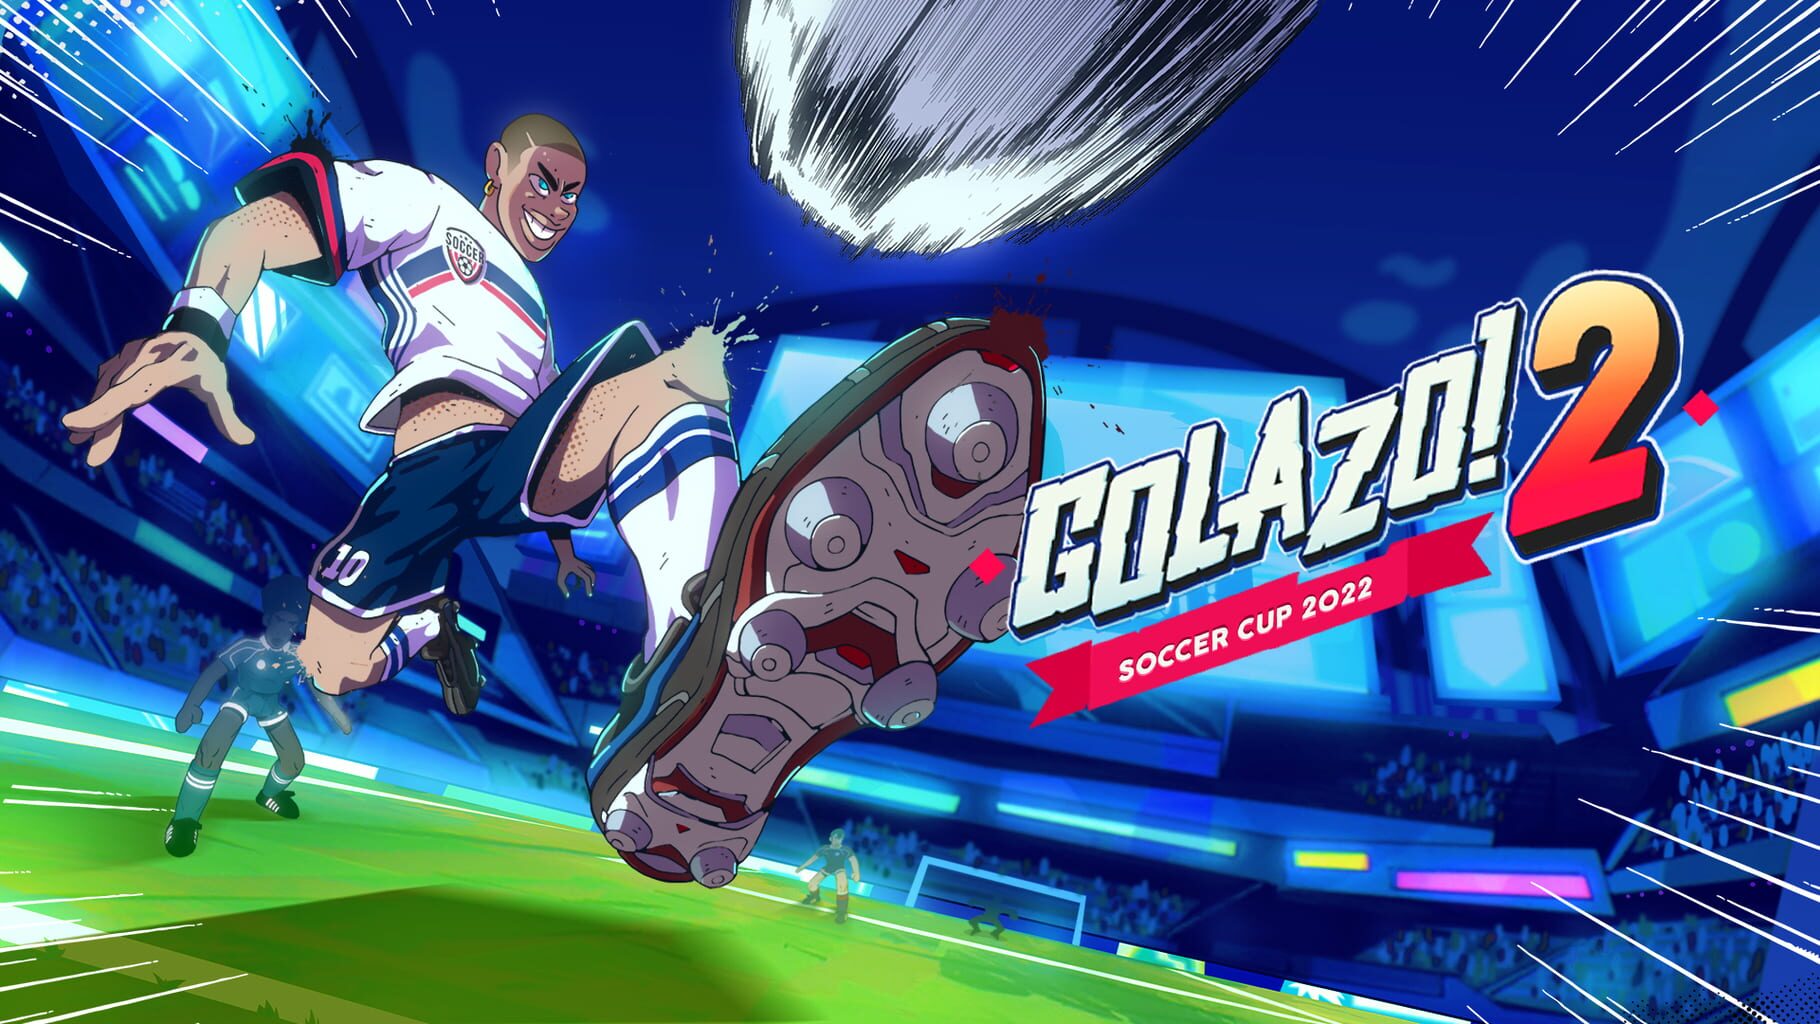 Golazo! 2: Soccer Cup 2022 artwork